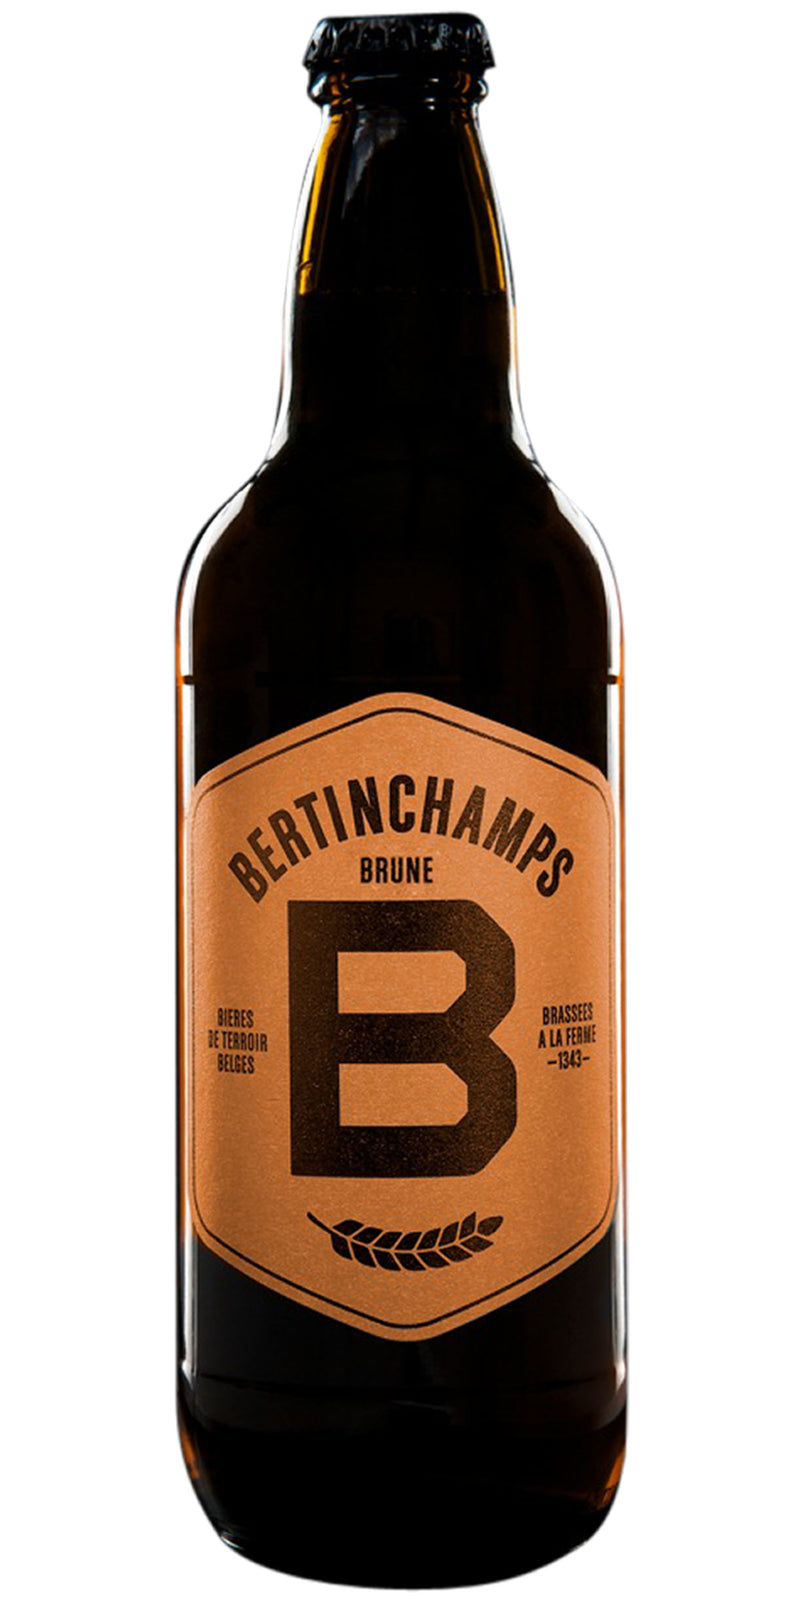 Bière Bertinchamps, Brune, Belgique, 50cl